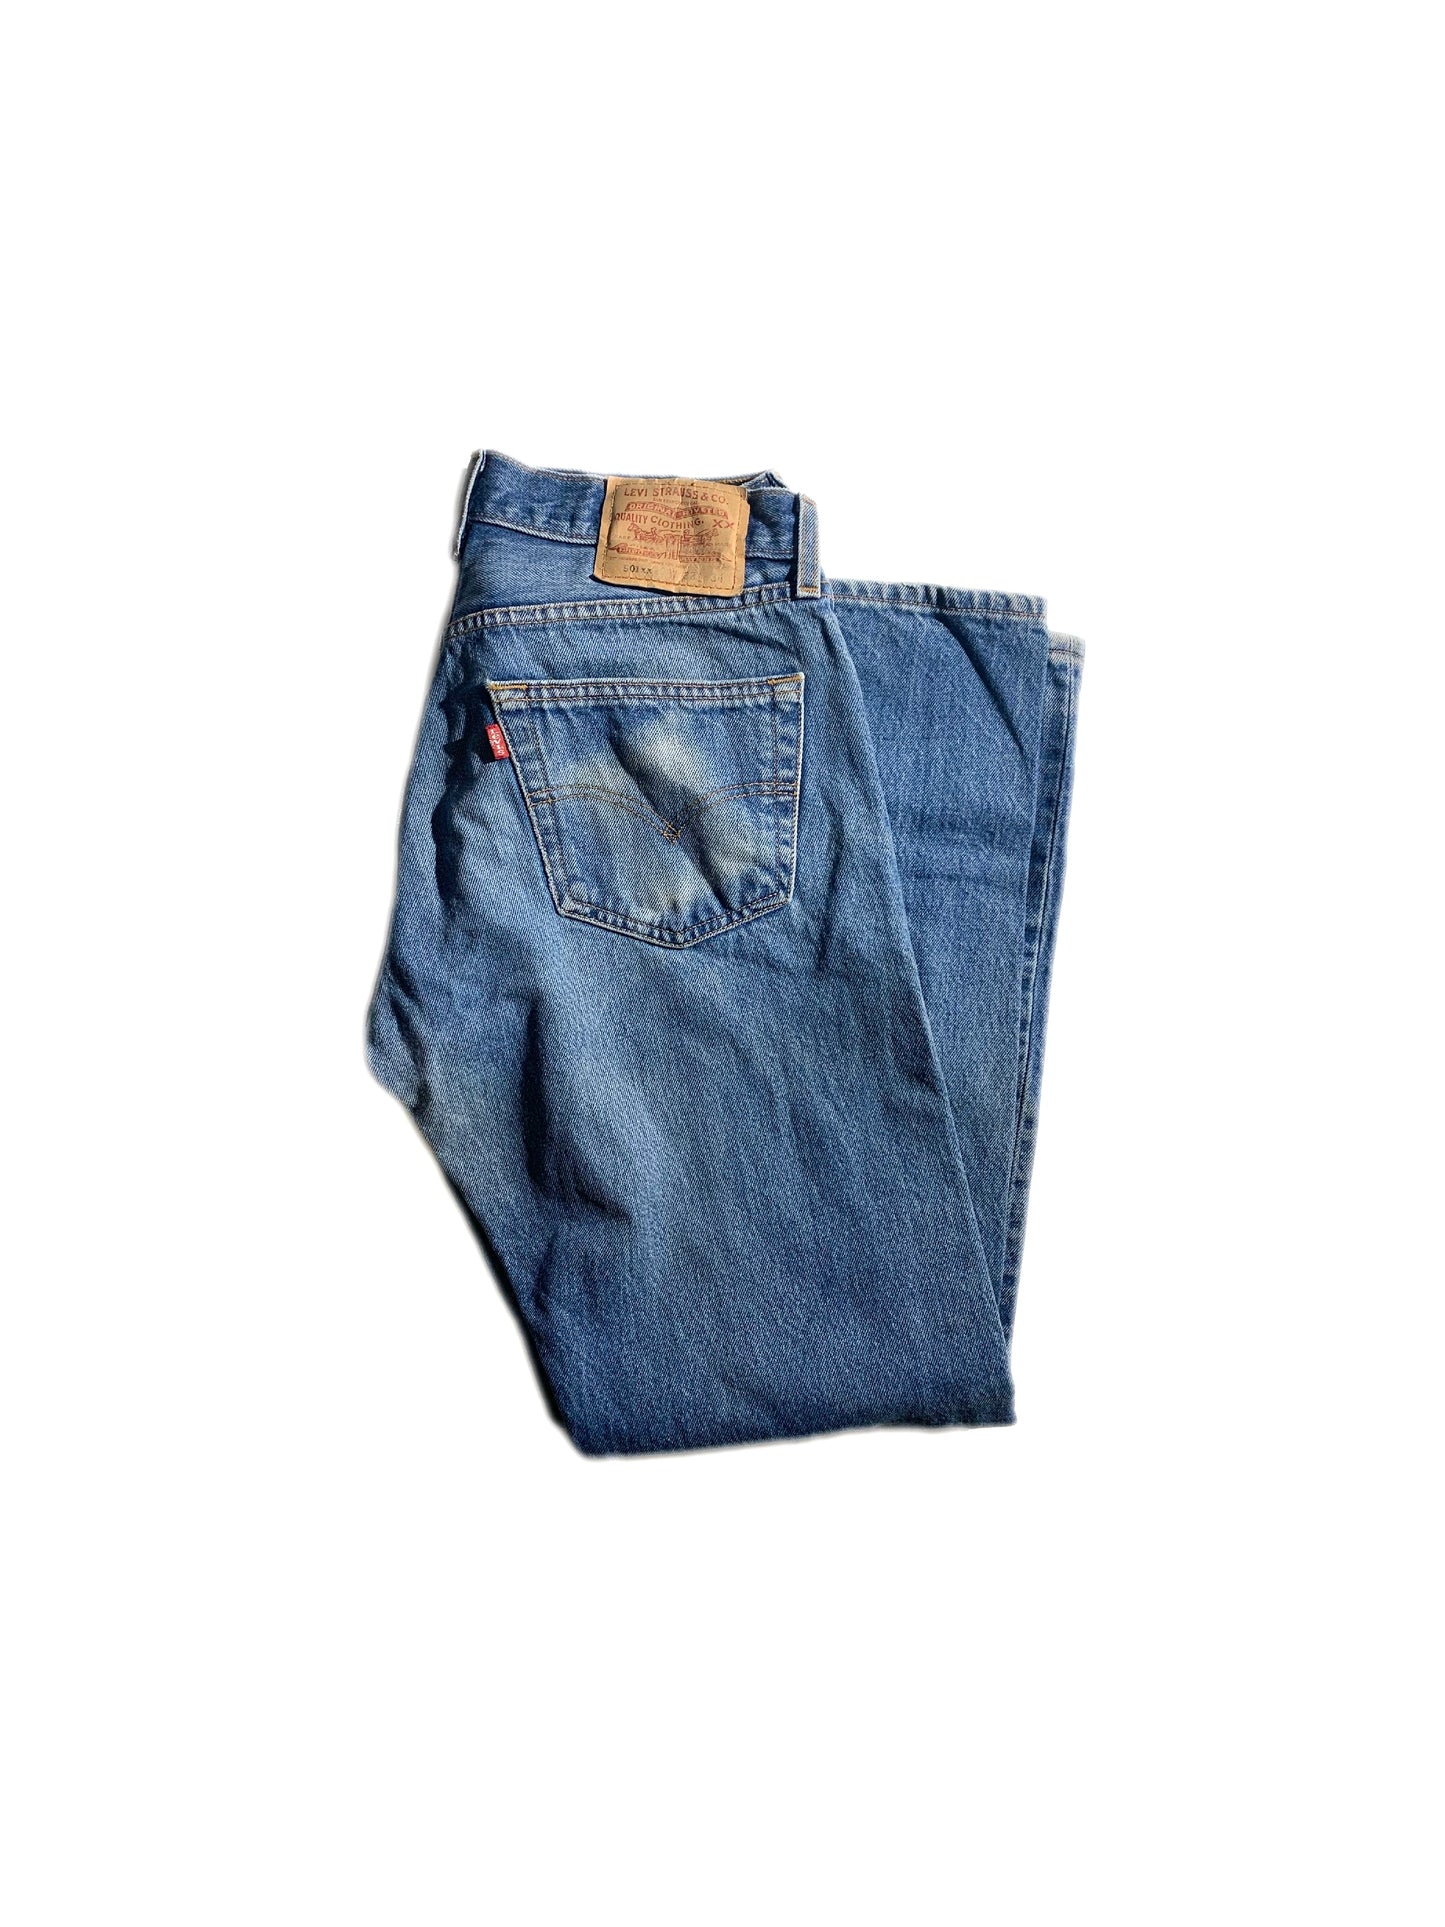 Vintage Medium Dark Wash 501 Levi’s Jeans